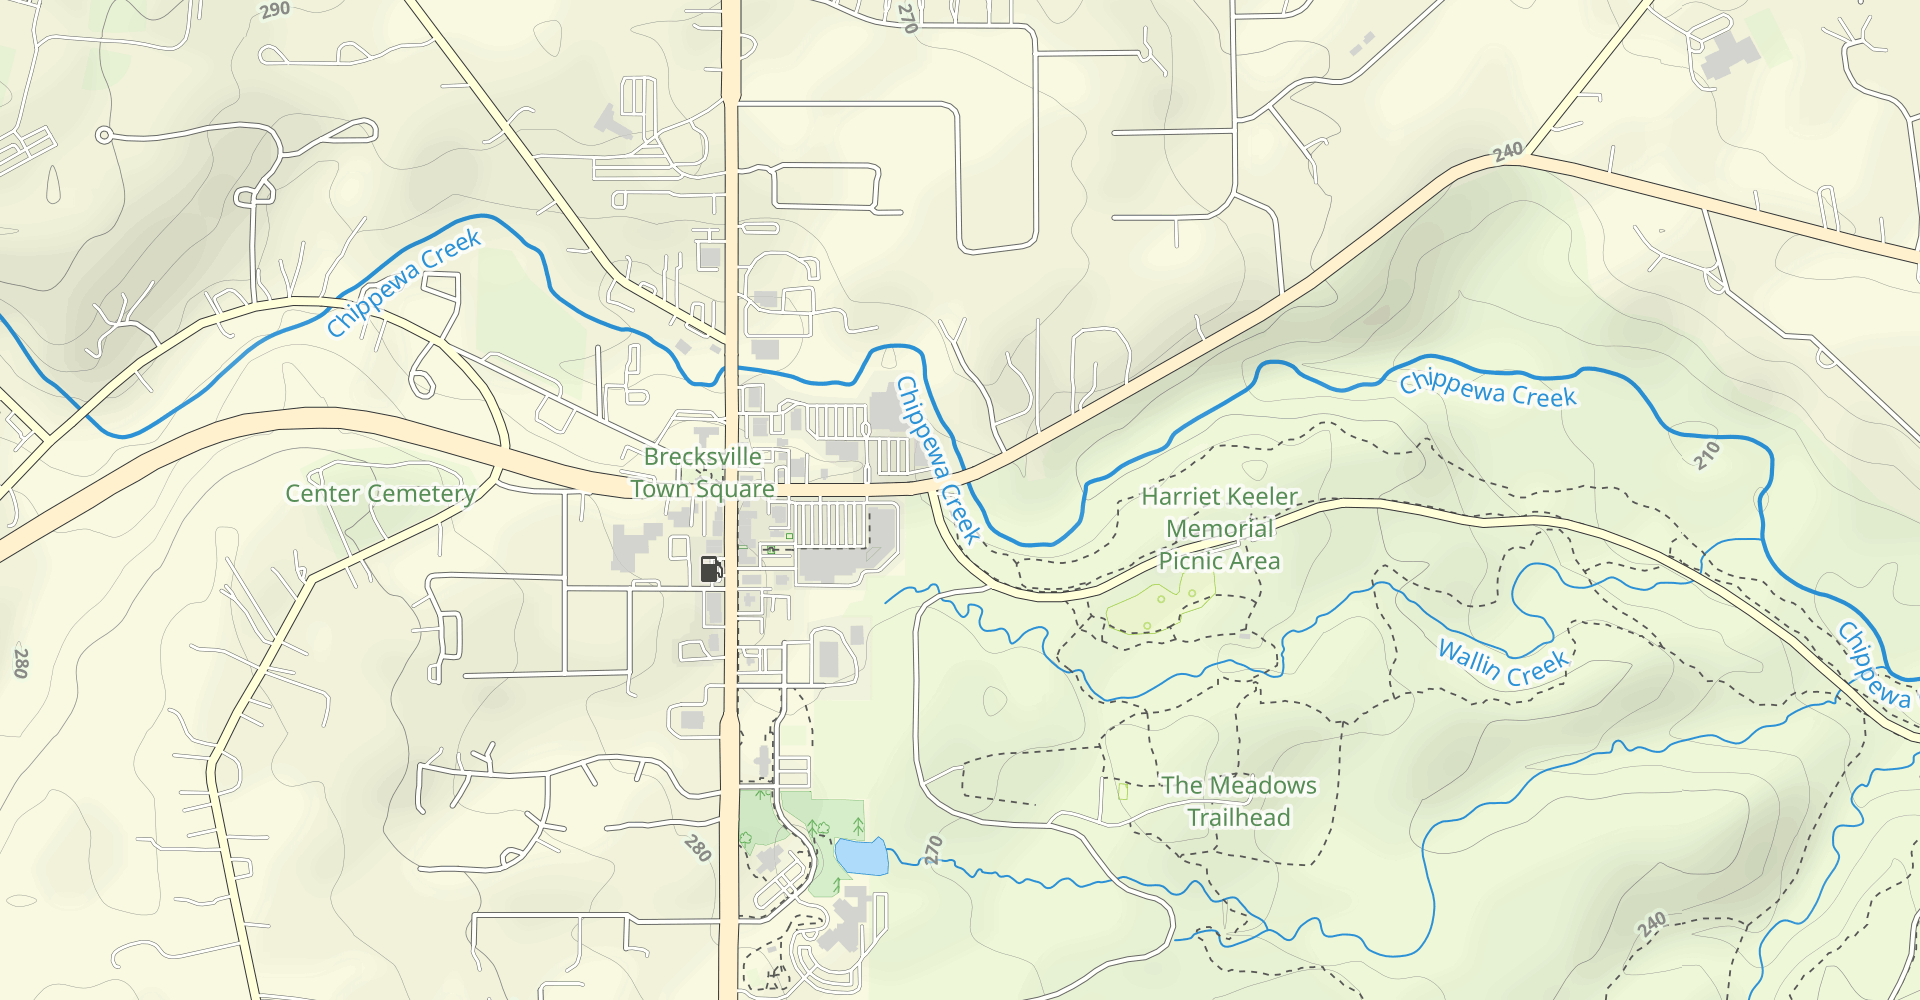 Hemlock and All Purpose Trail Loop from Chippewa Creek Gorge Overlook